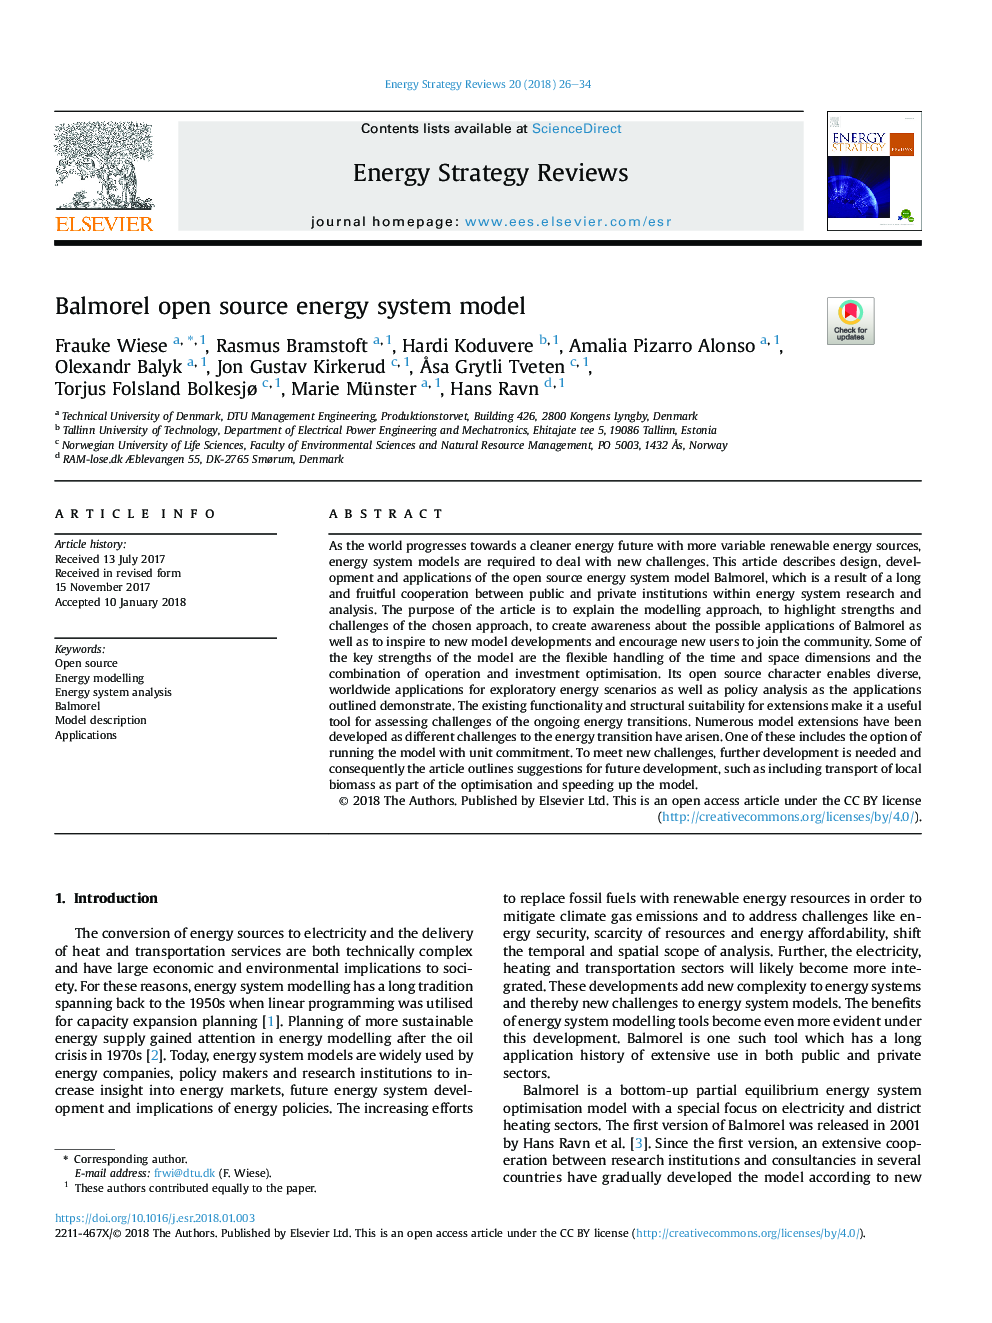 Balmorel open source energy system model